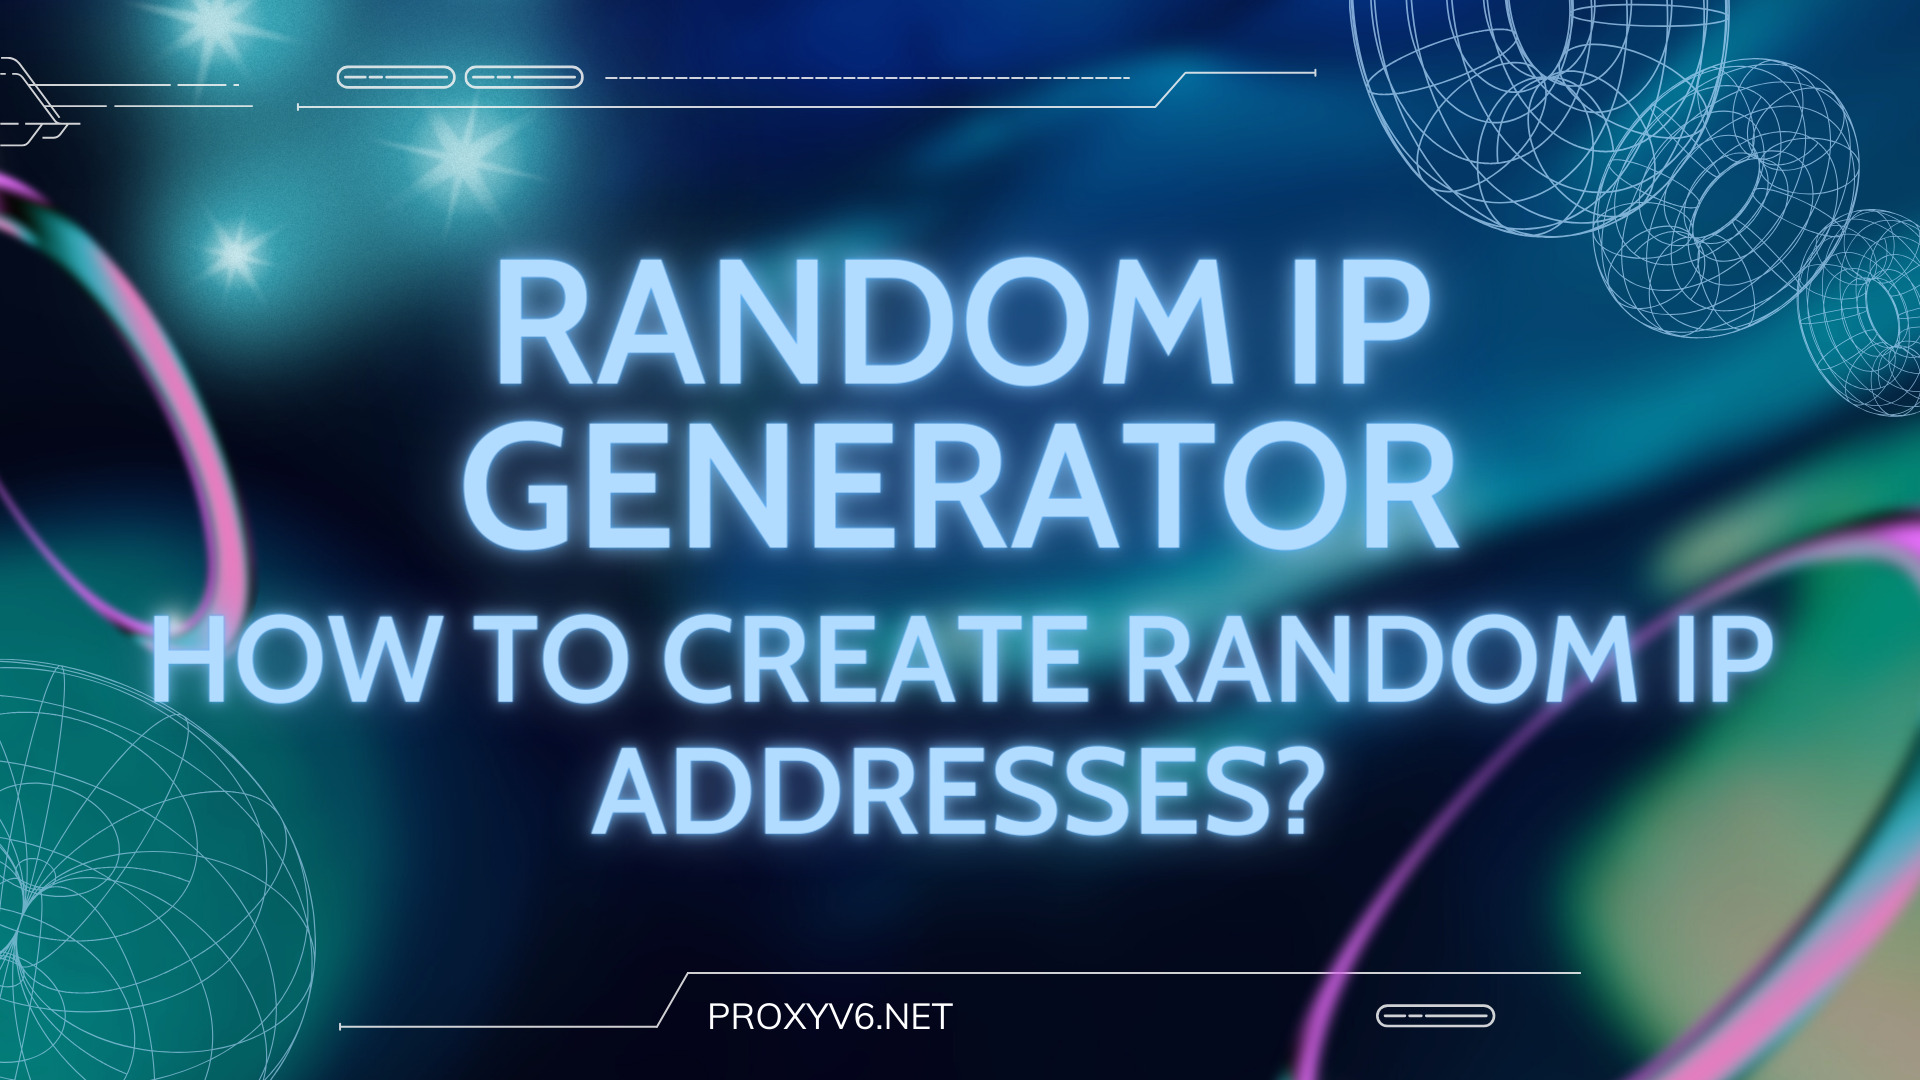 Random IP Generator - How to Create Random IP Addresses?